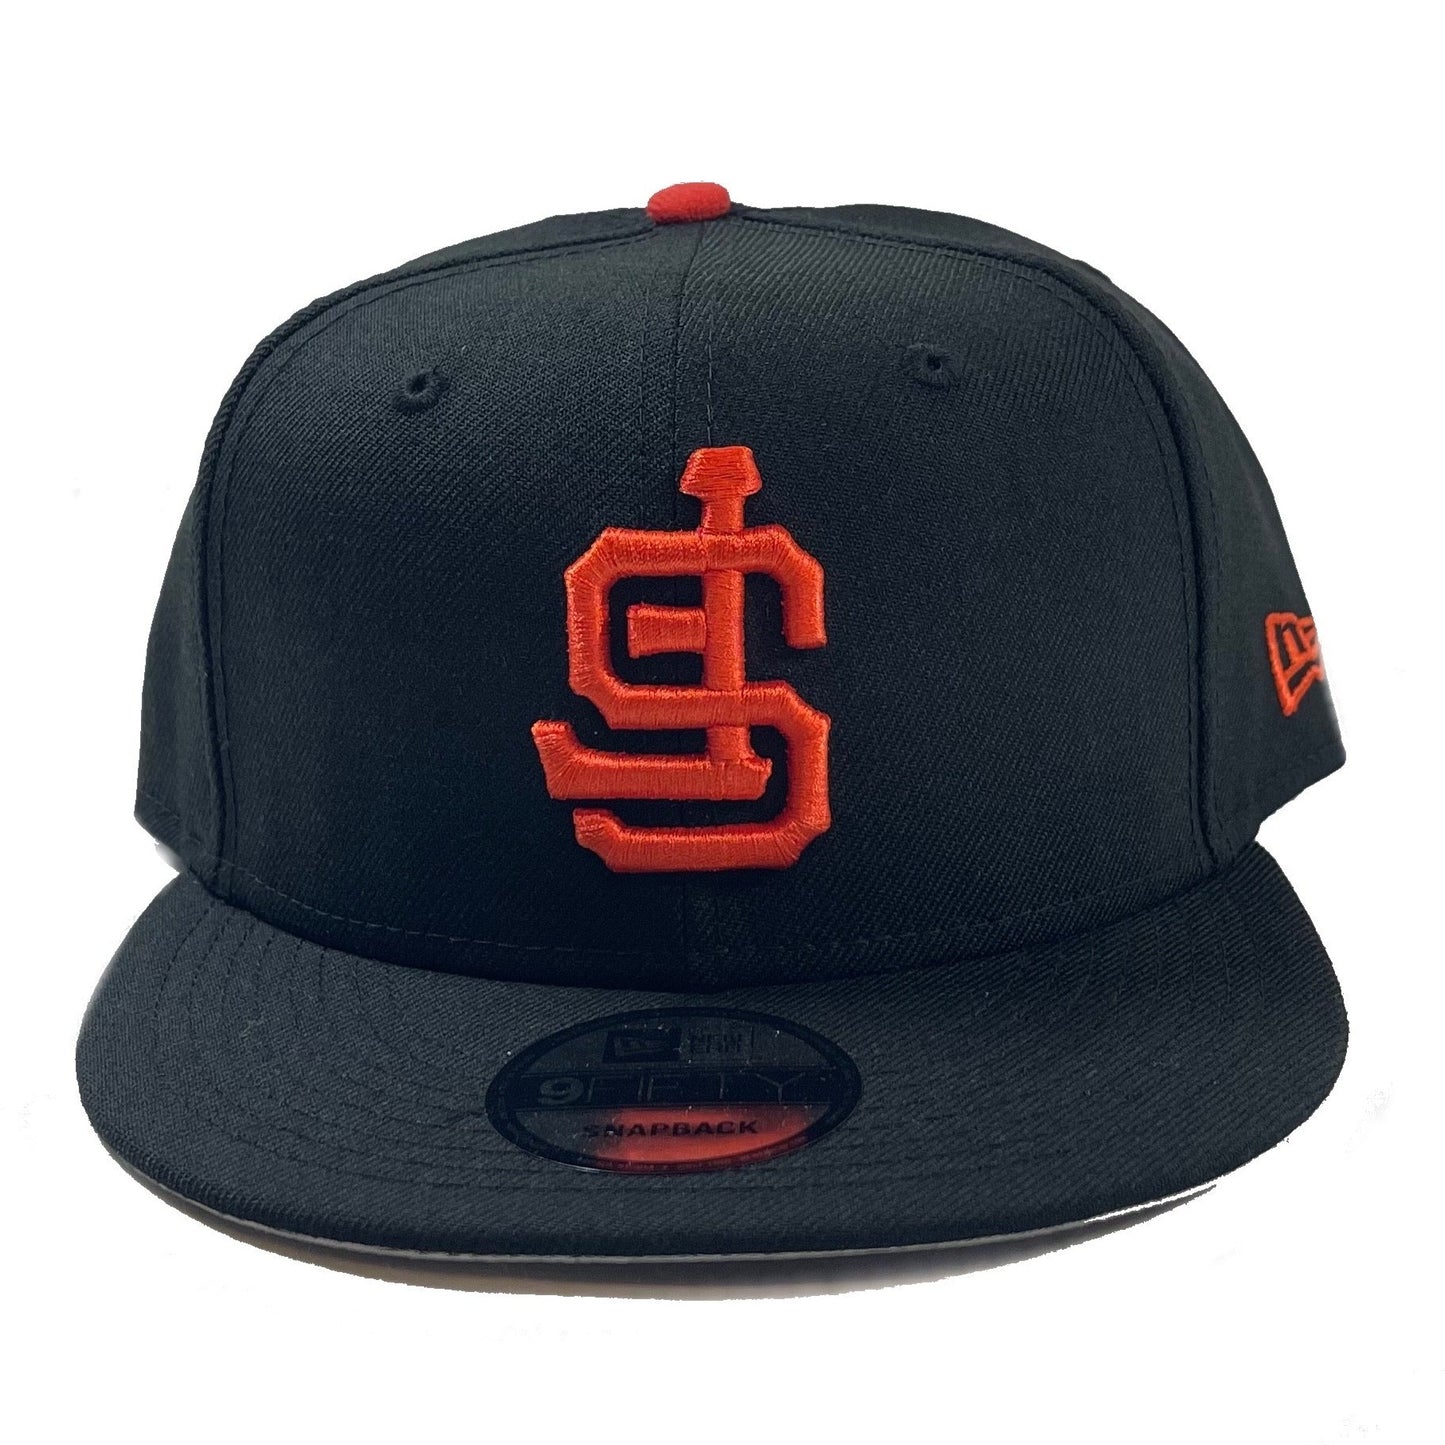 St. Louis Cardinals Upside Down Logo (Black) Snapback